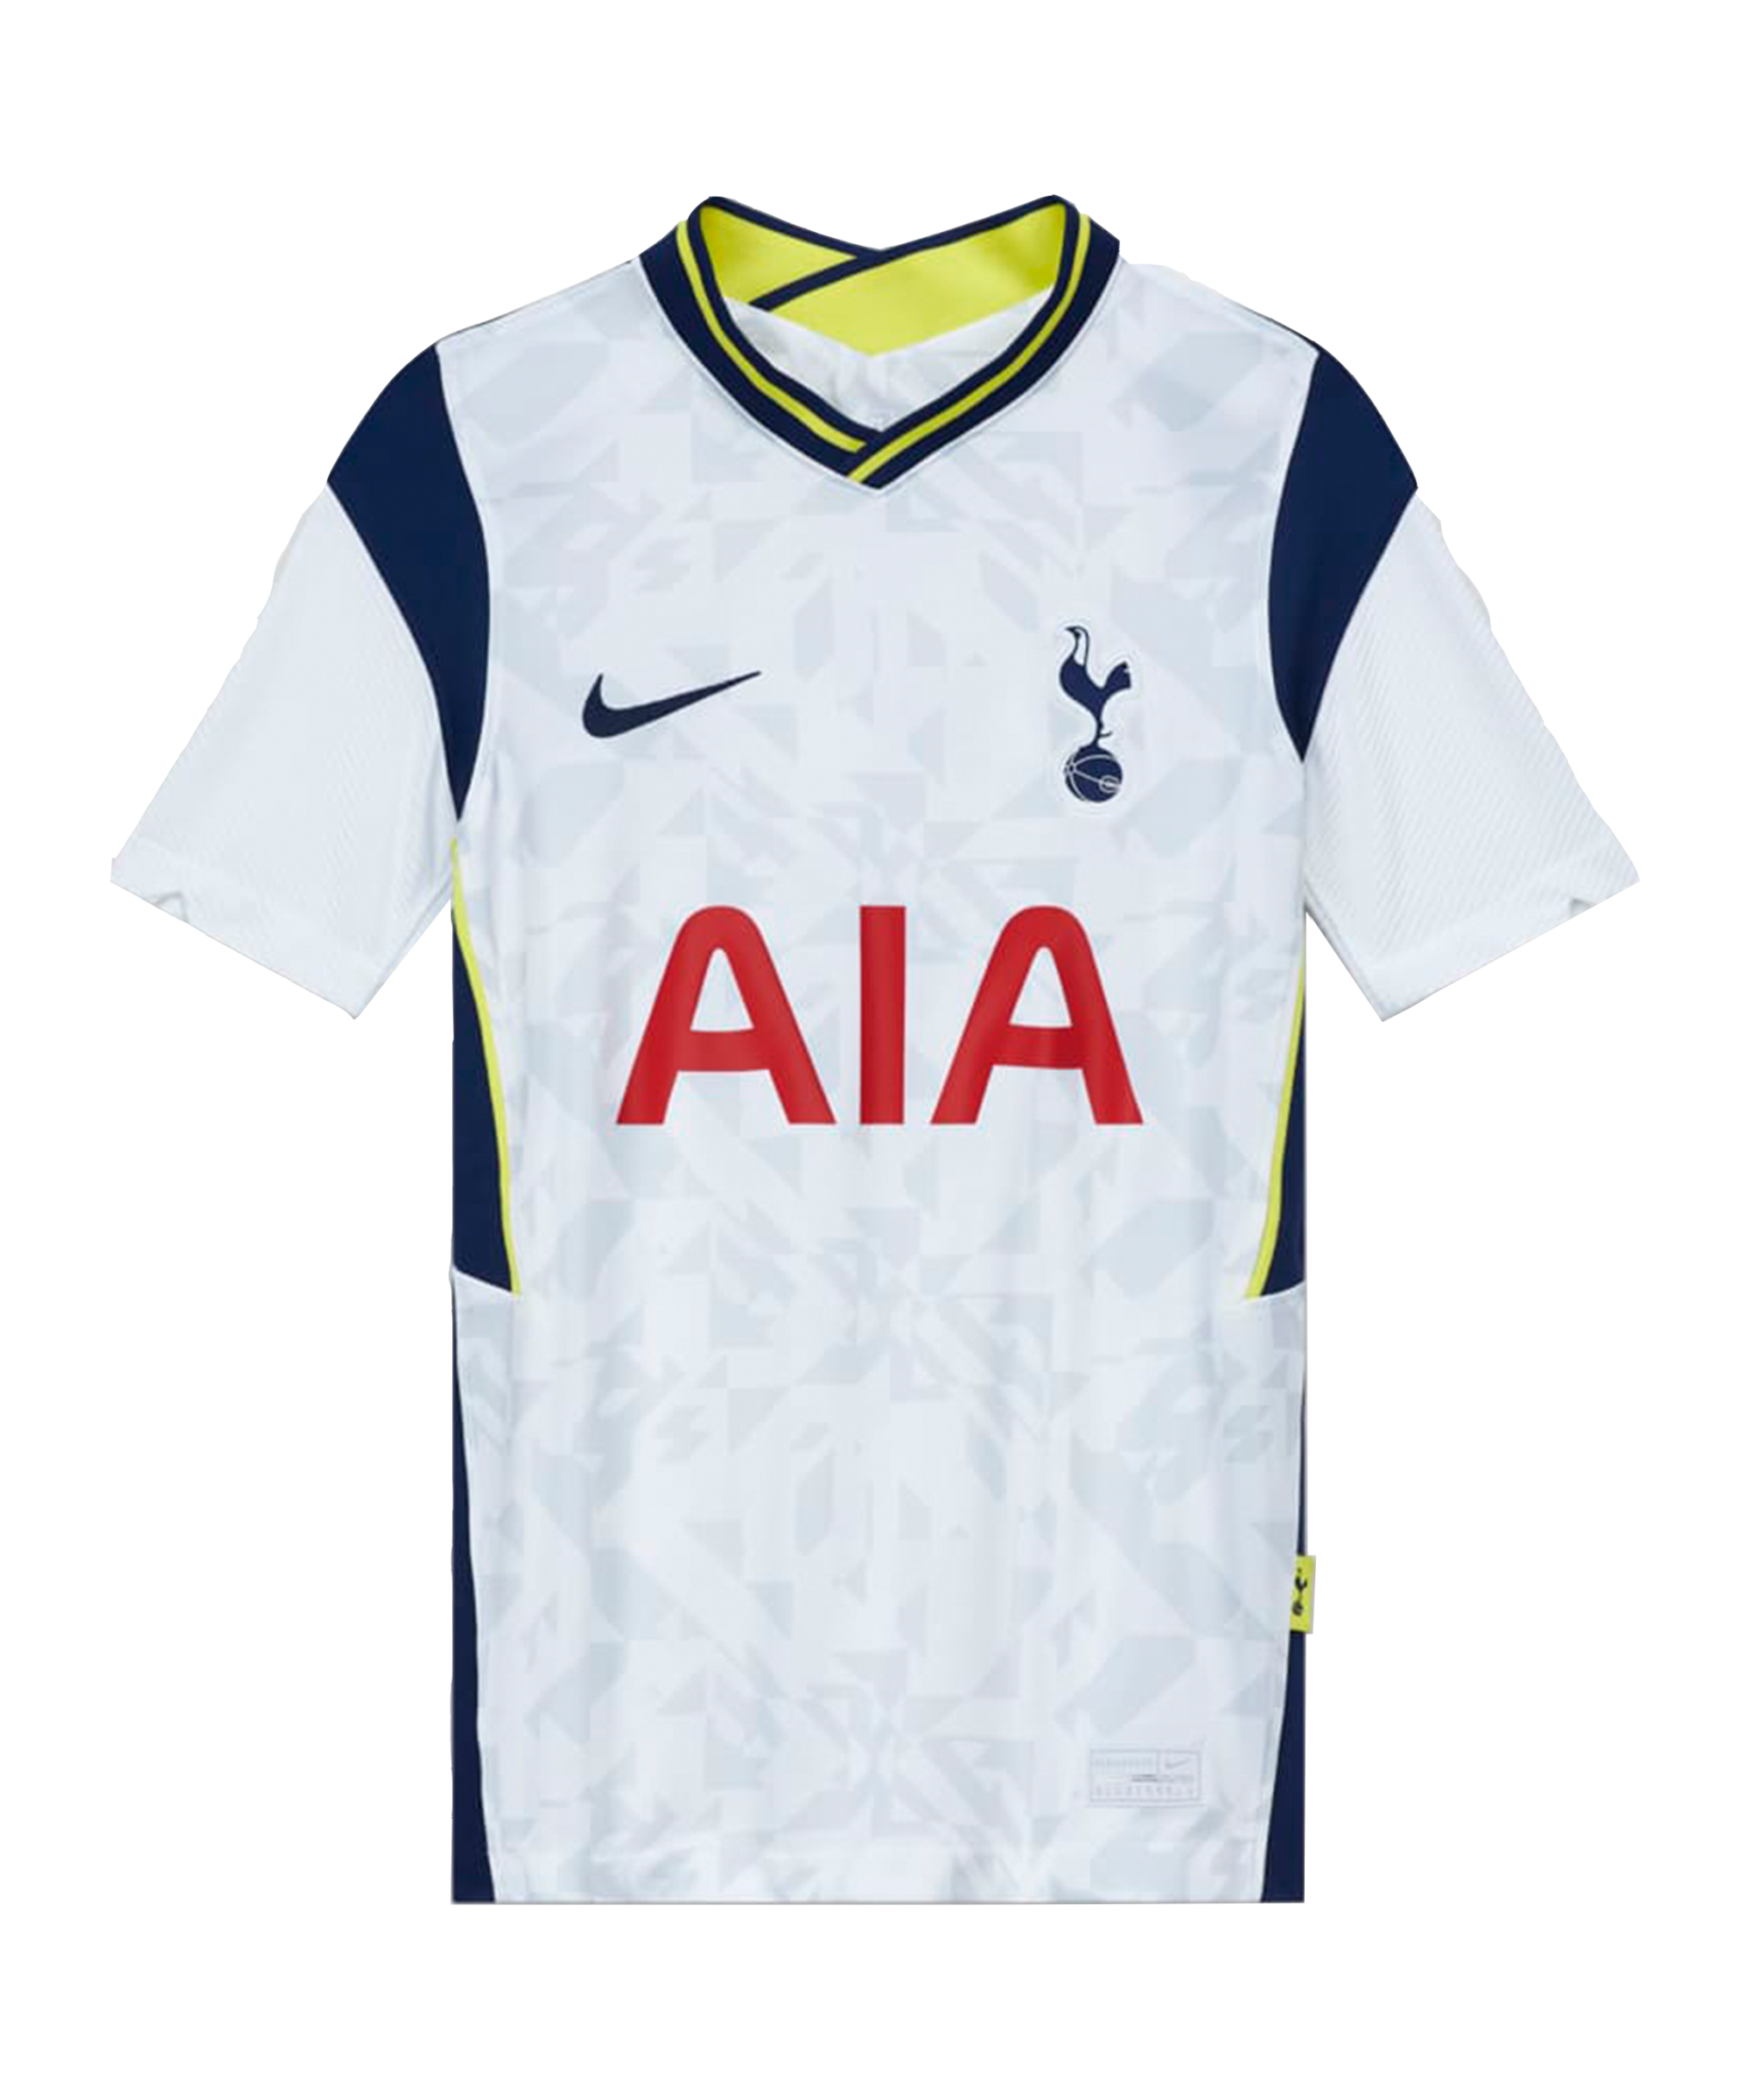 Tottenham Hotspur Home football shirt 2020 - 2021 Nike Young Size trikot M  ig93